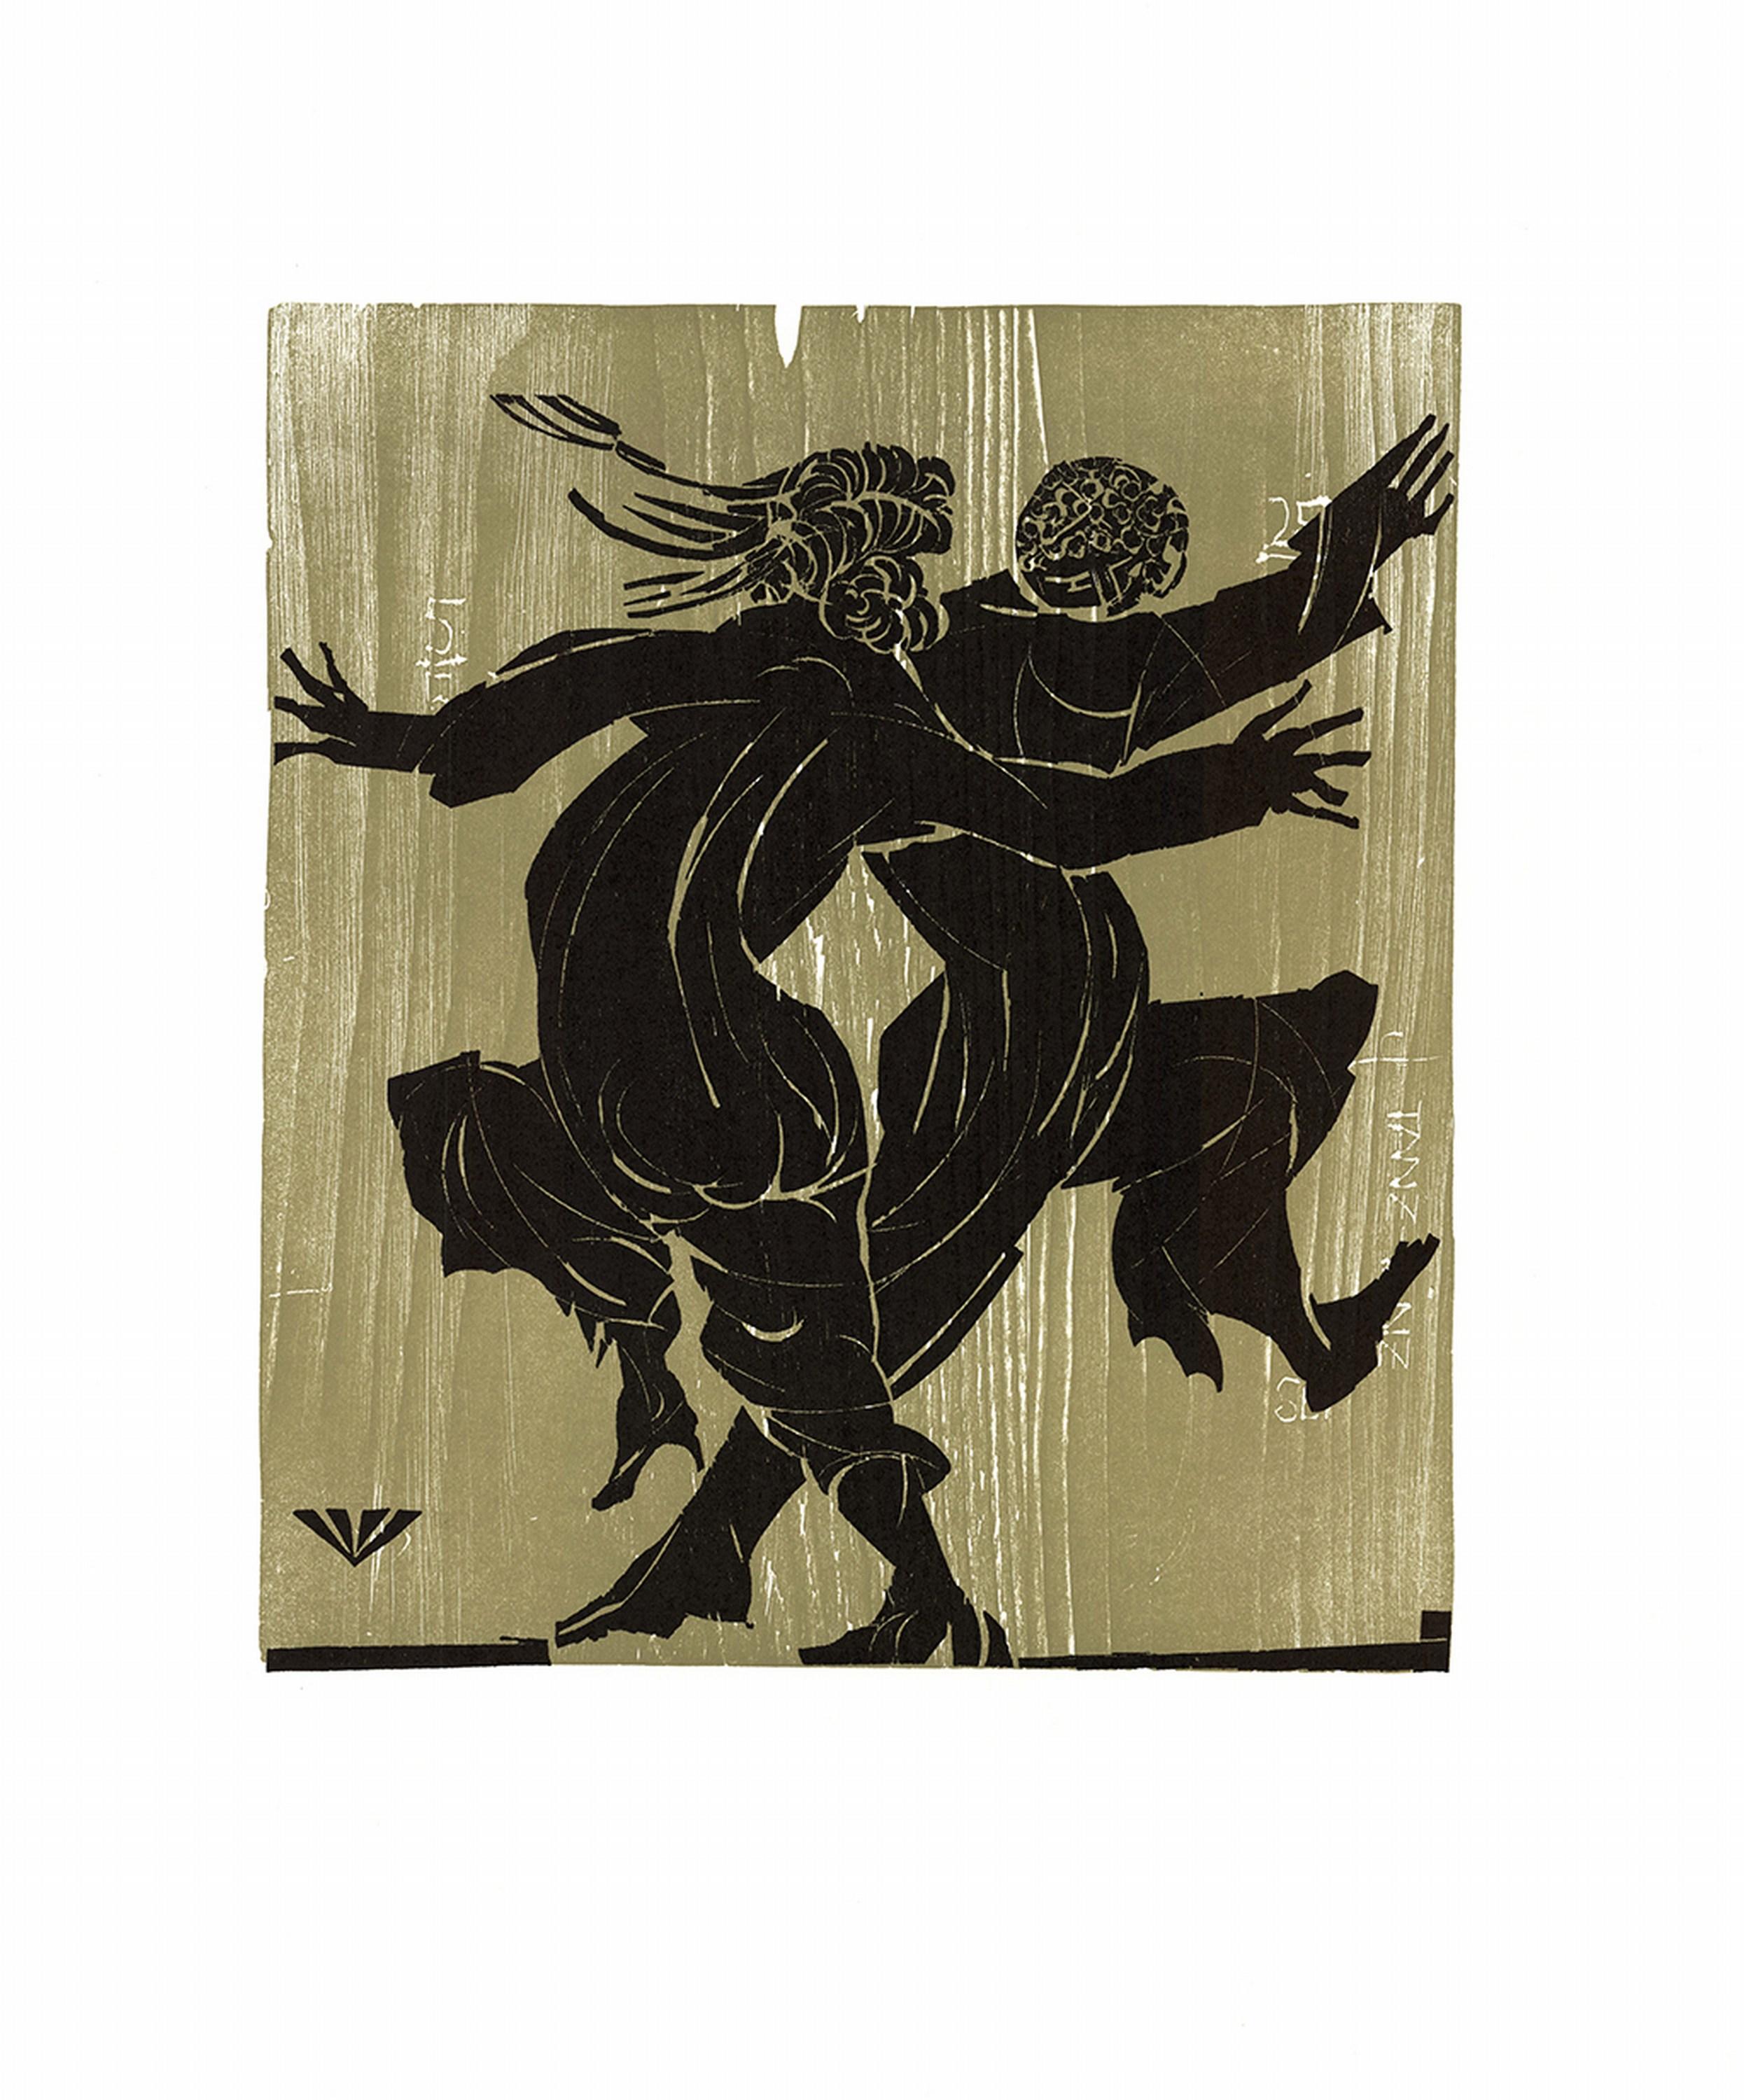 Dance (Earth Tone, Dark, Gestural, Movement, Shadow, ~40% OFF LIST PRICE) - Print by Detlef Willand